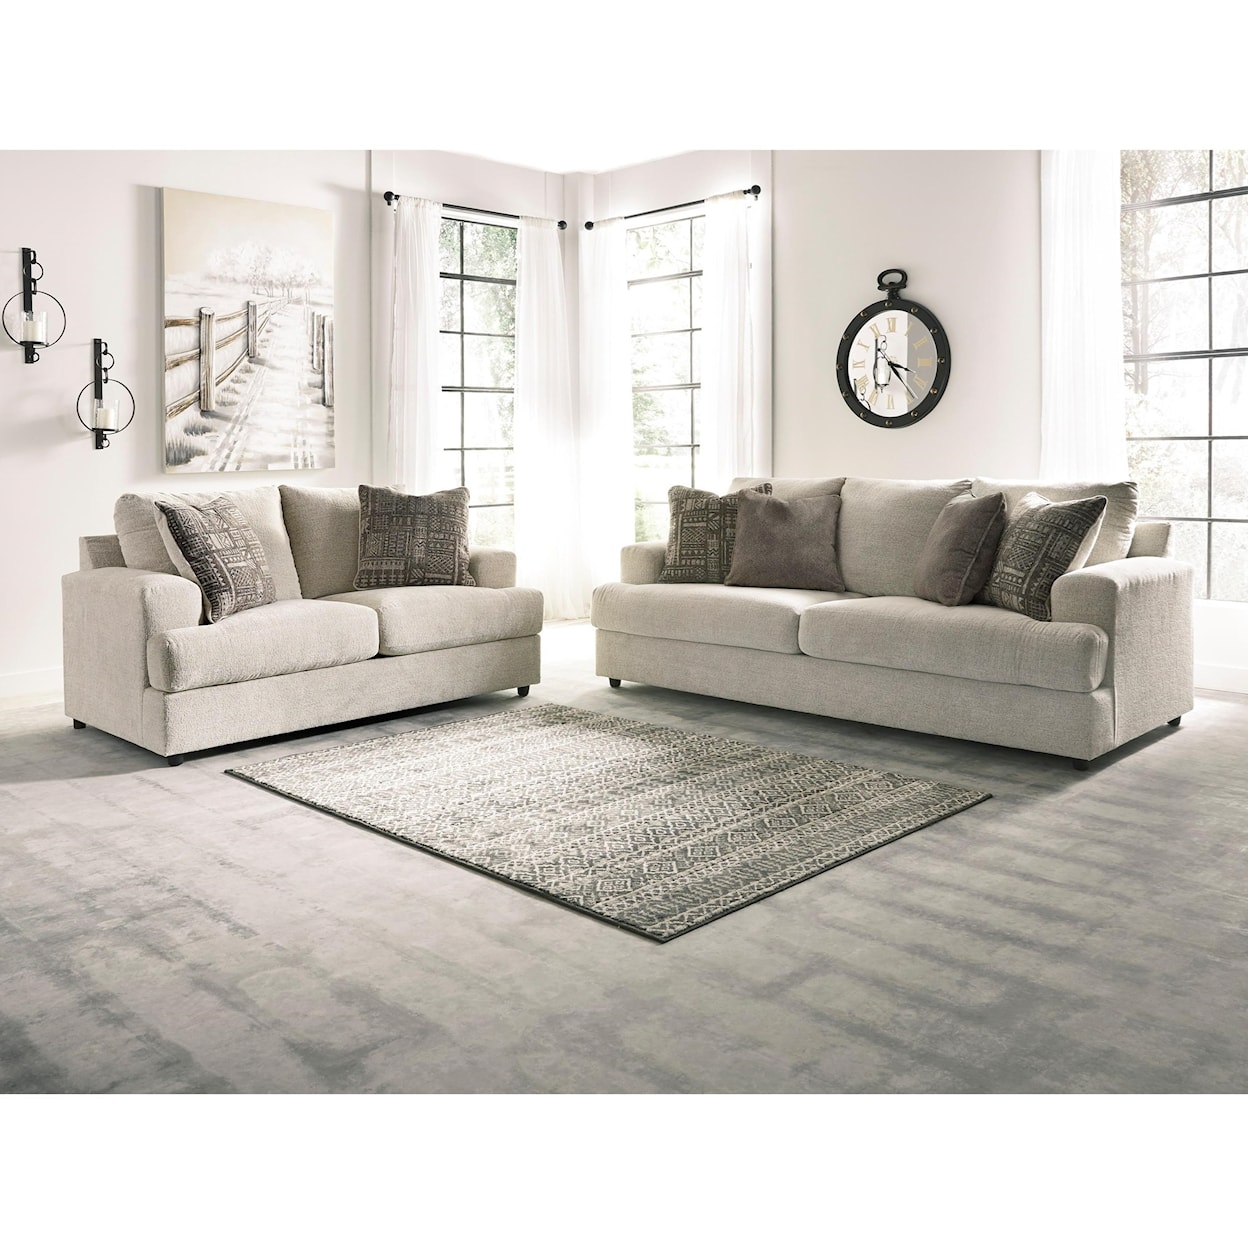 Ashley Furniture Signature Design Soletren Stationary Living Room Group